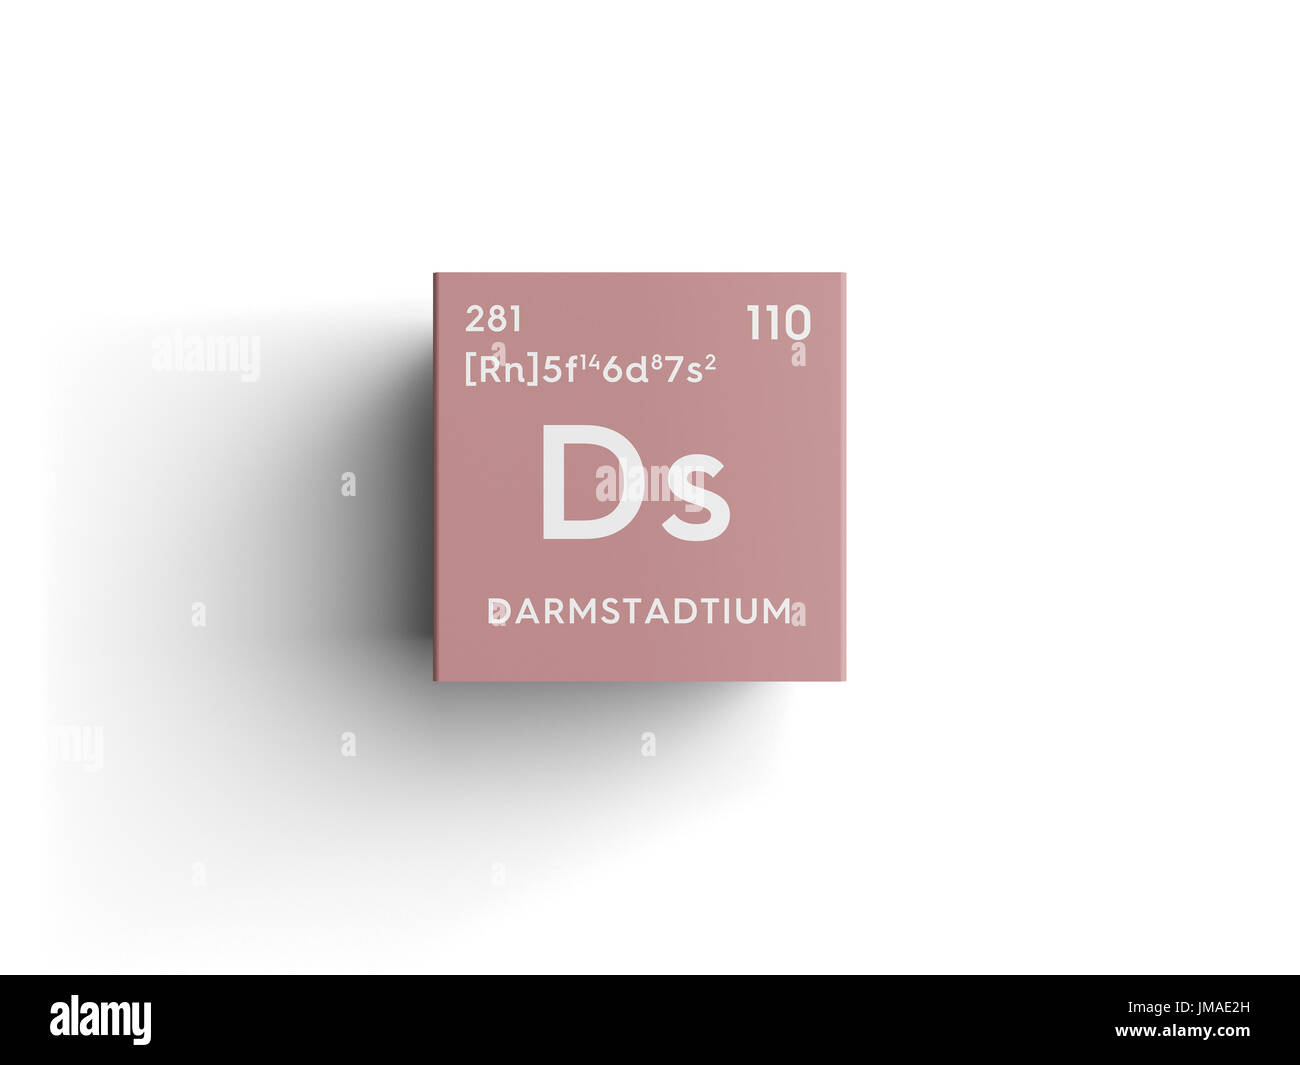 Darmstadtium. Transition metals. Chemical Element of Mendeleev's Periodic Table. Darmstadtium in square cube creative concept. Stock Photo